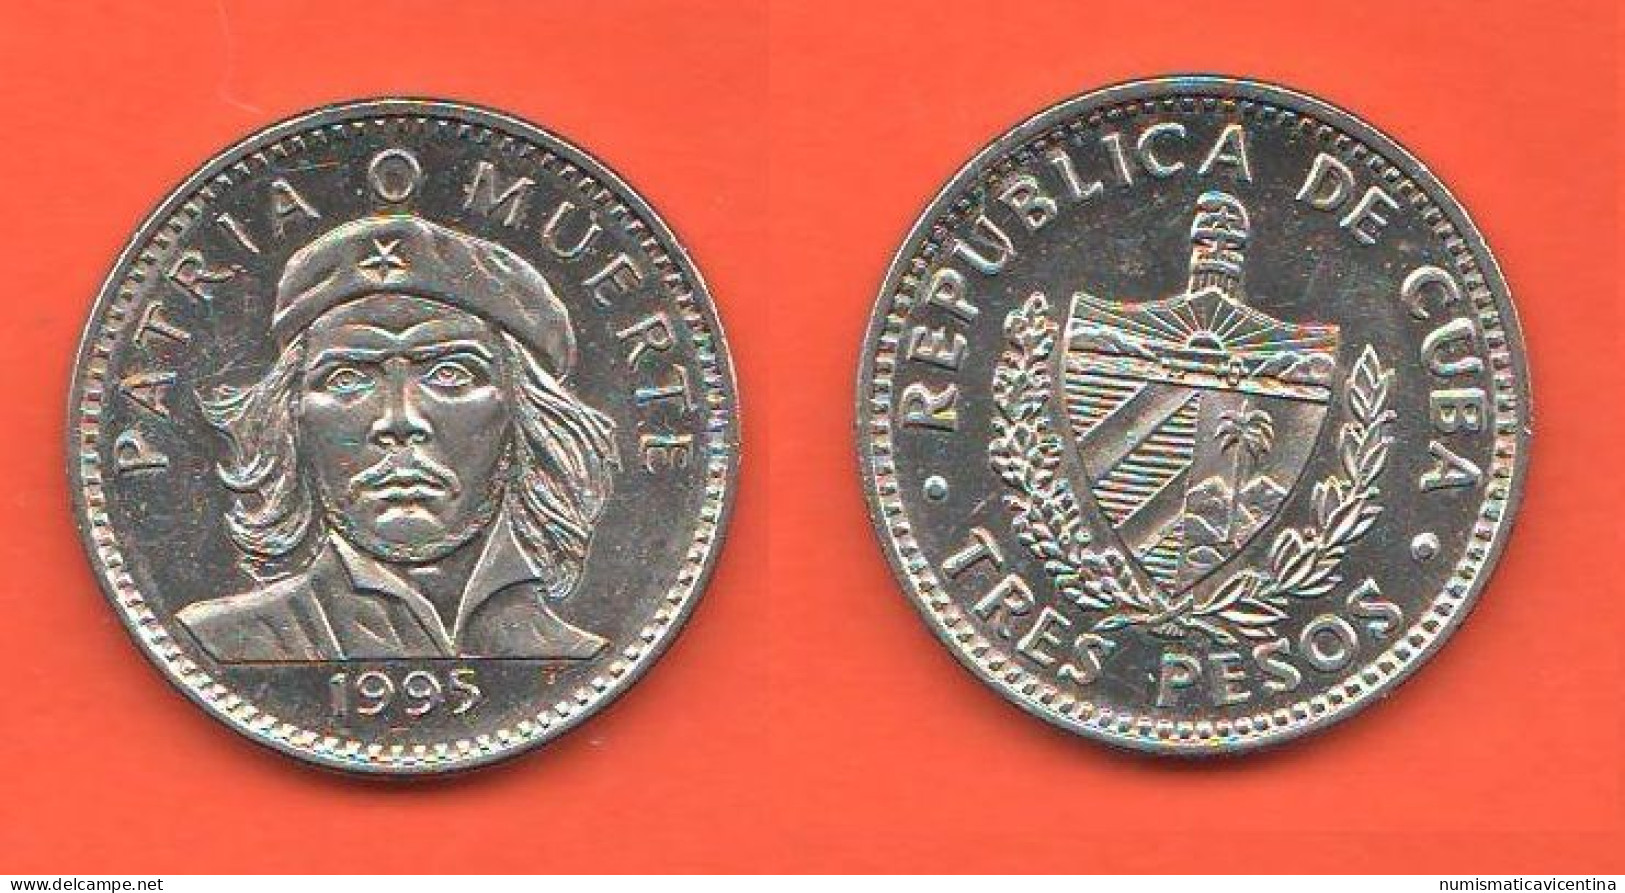 Cuba 3 Pesos 1995 Che Guevara Nickel Coin Motto Patria O Muerte - Cuba